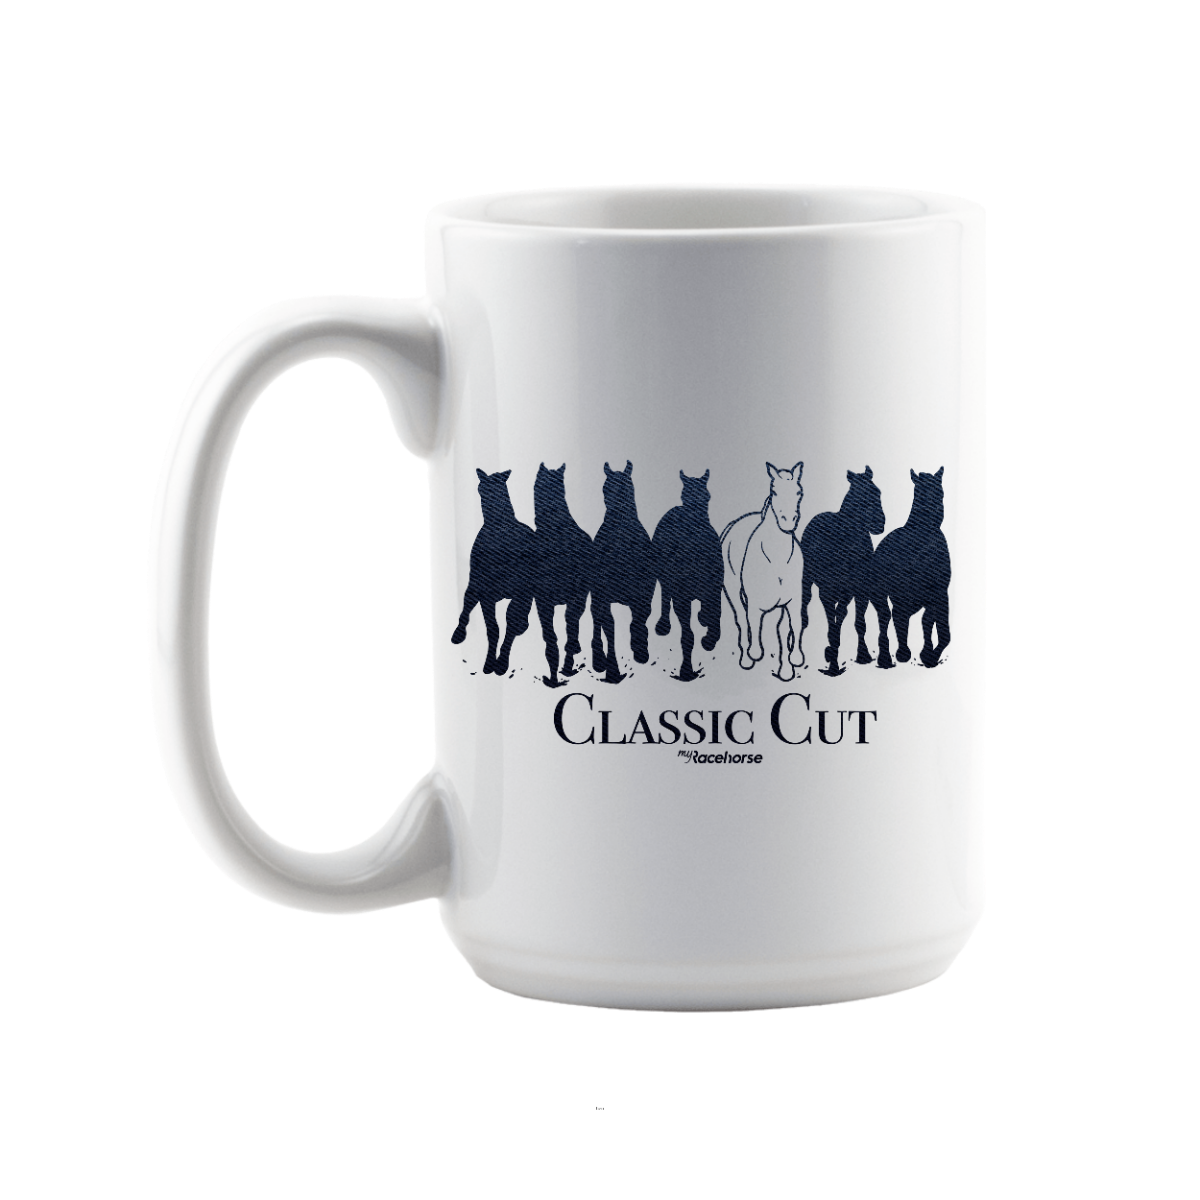 15 oz Classic Cut Coffee Cup